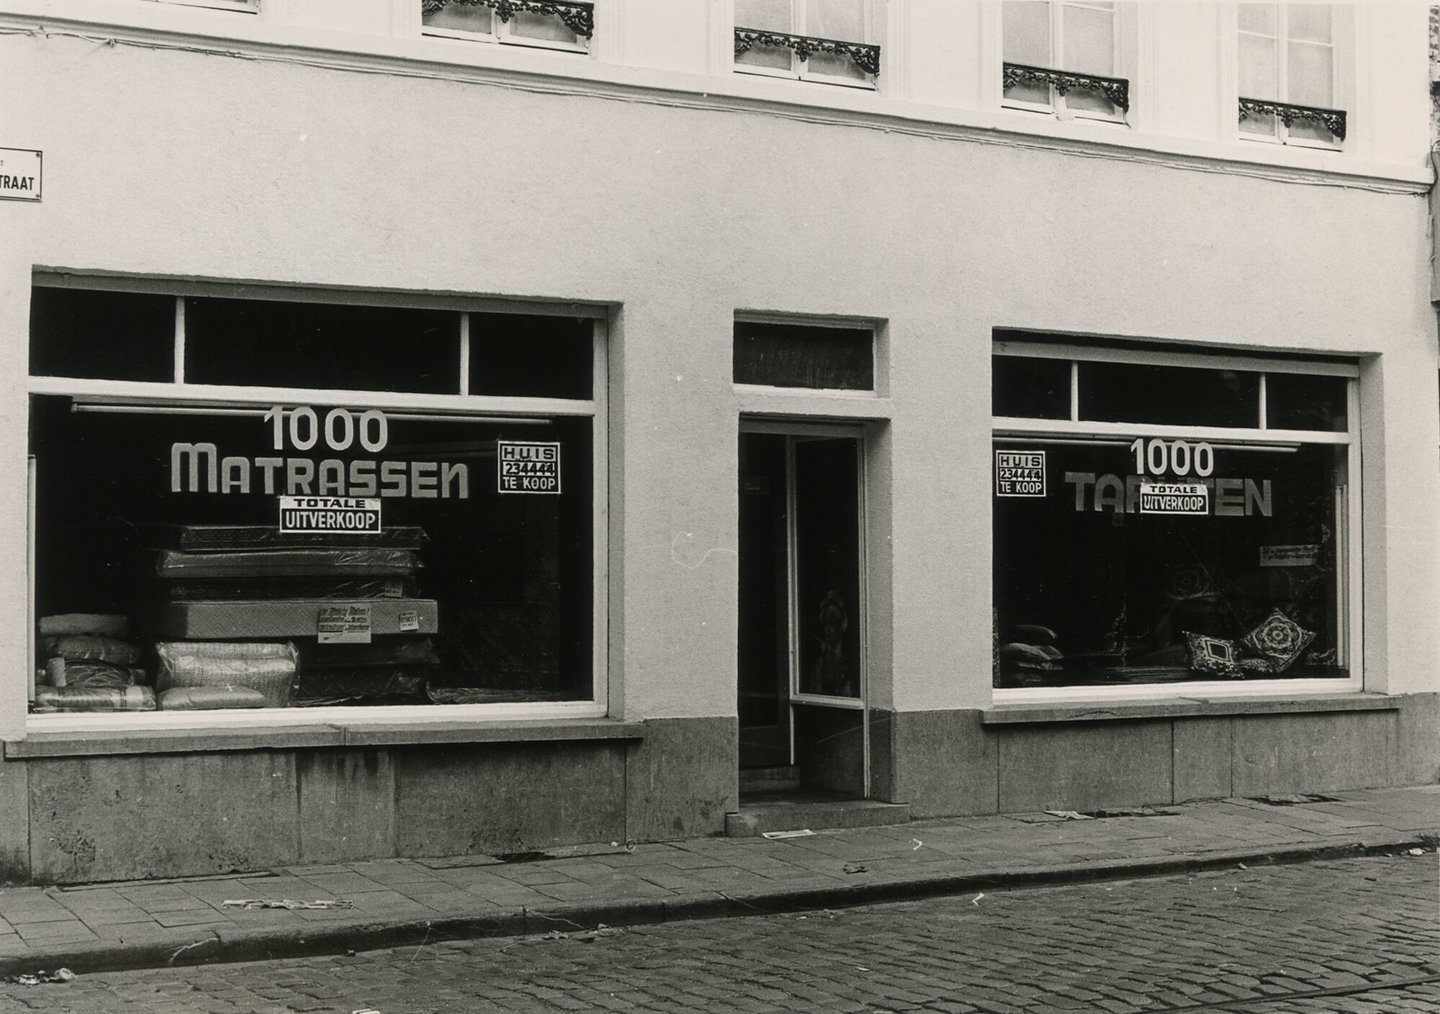 Etalage van matrassenwinkel 1000 Matrassen in Gent